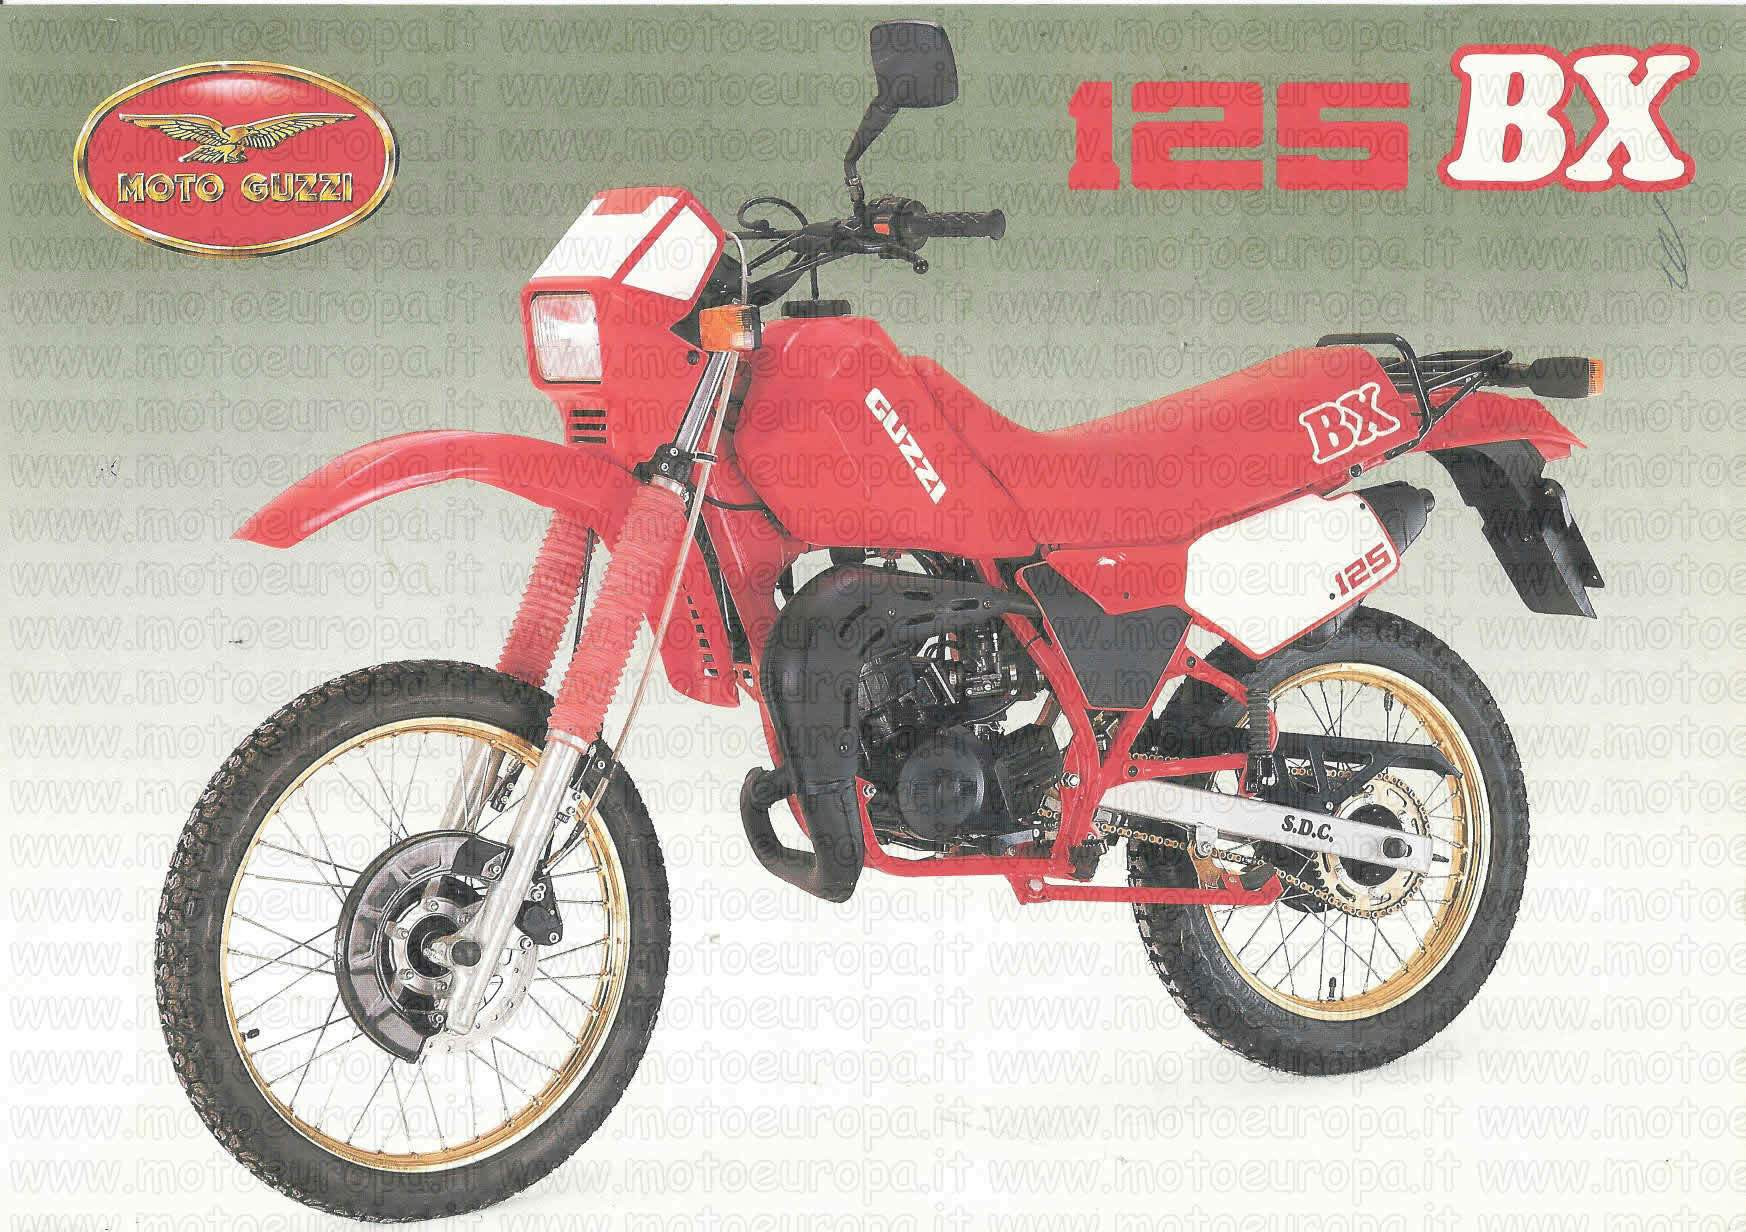 Мотоцикл Moto Guzzi 125TT BX 1985 фото